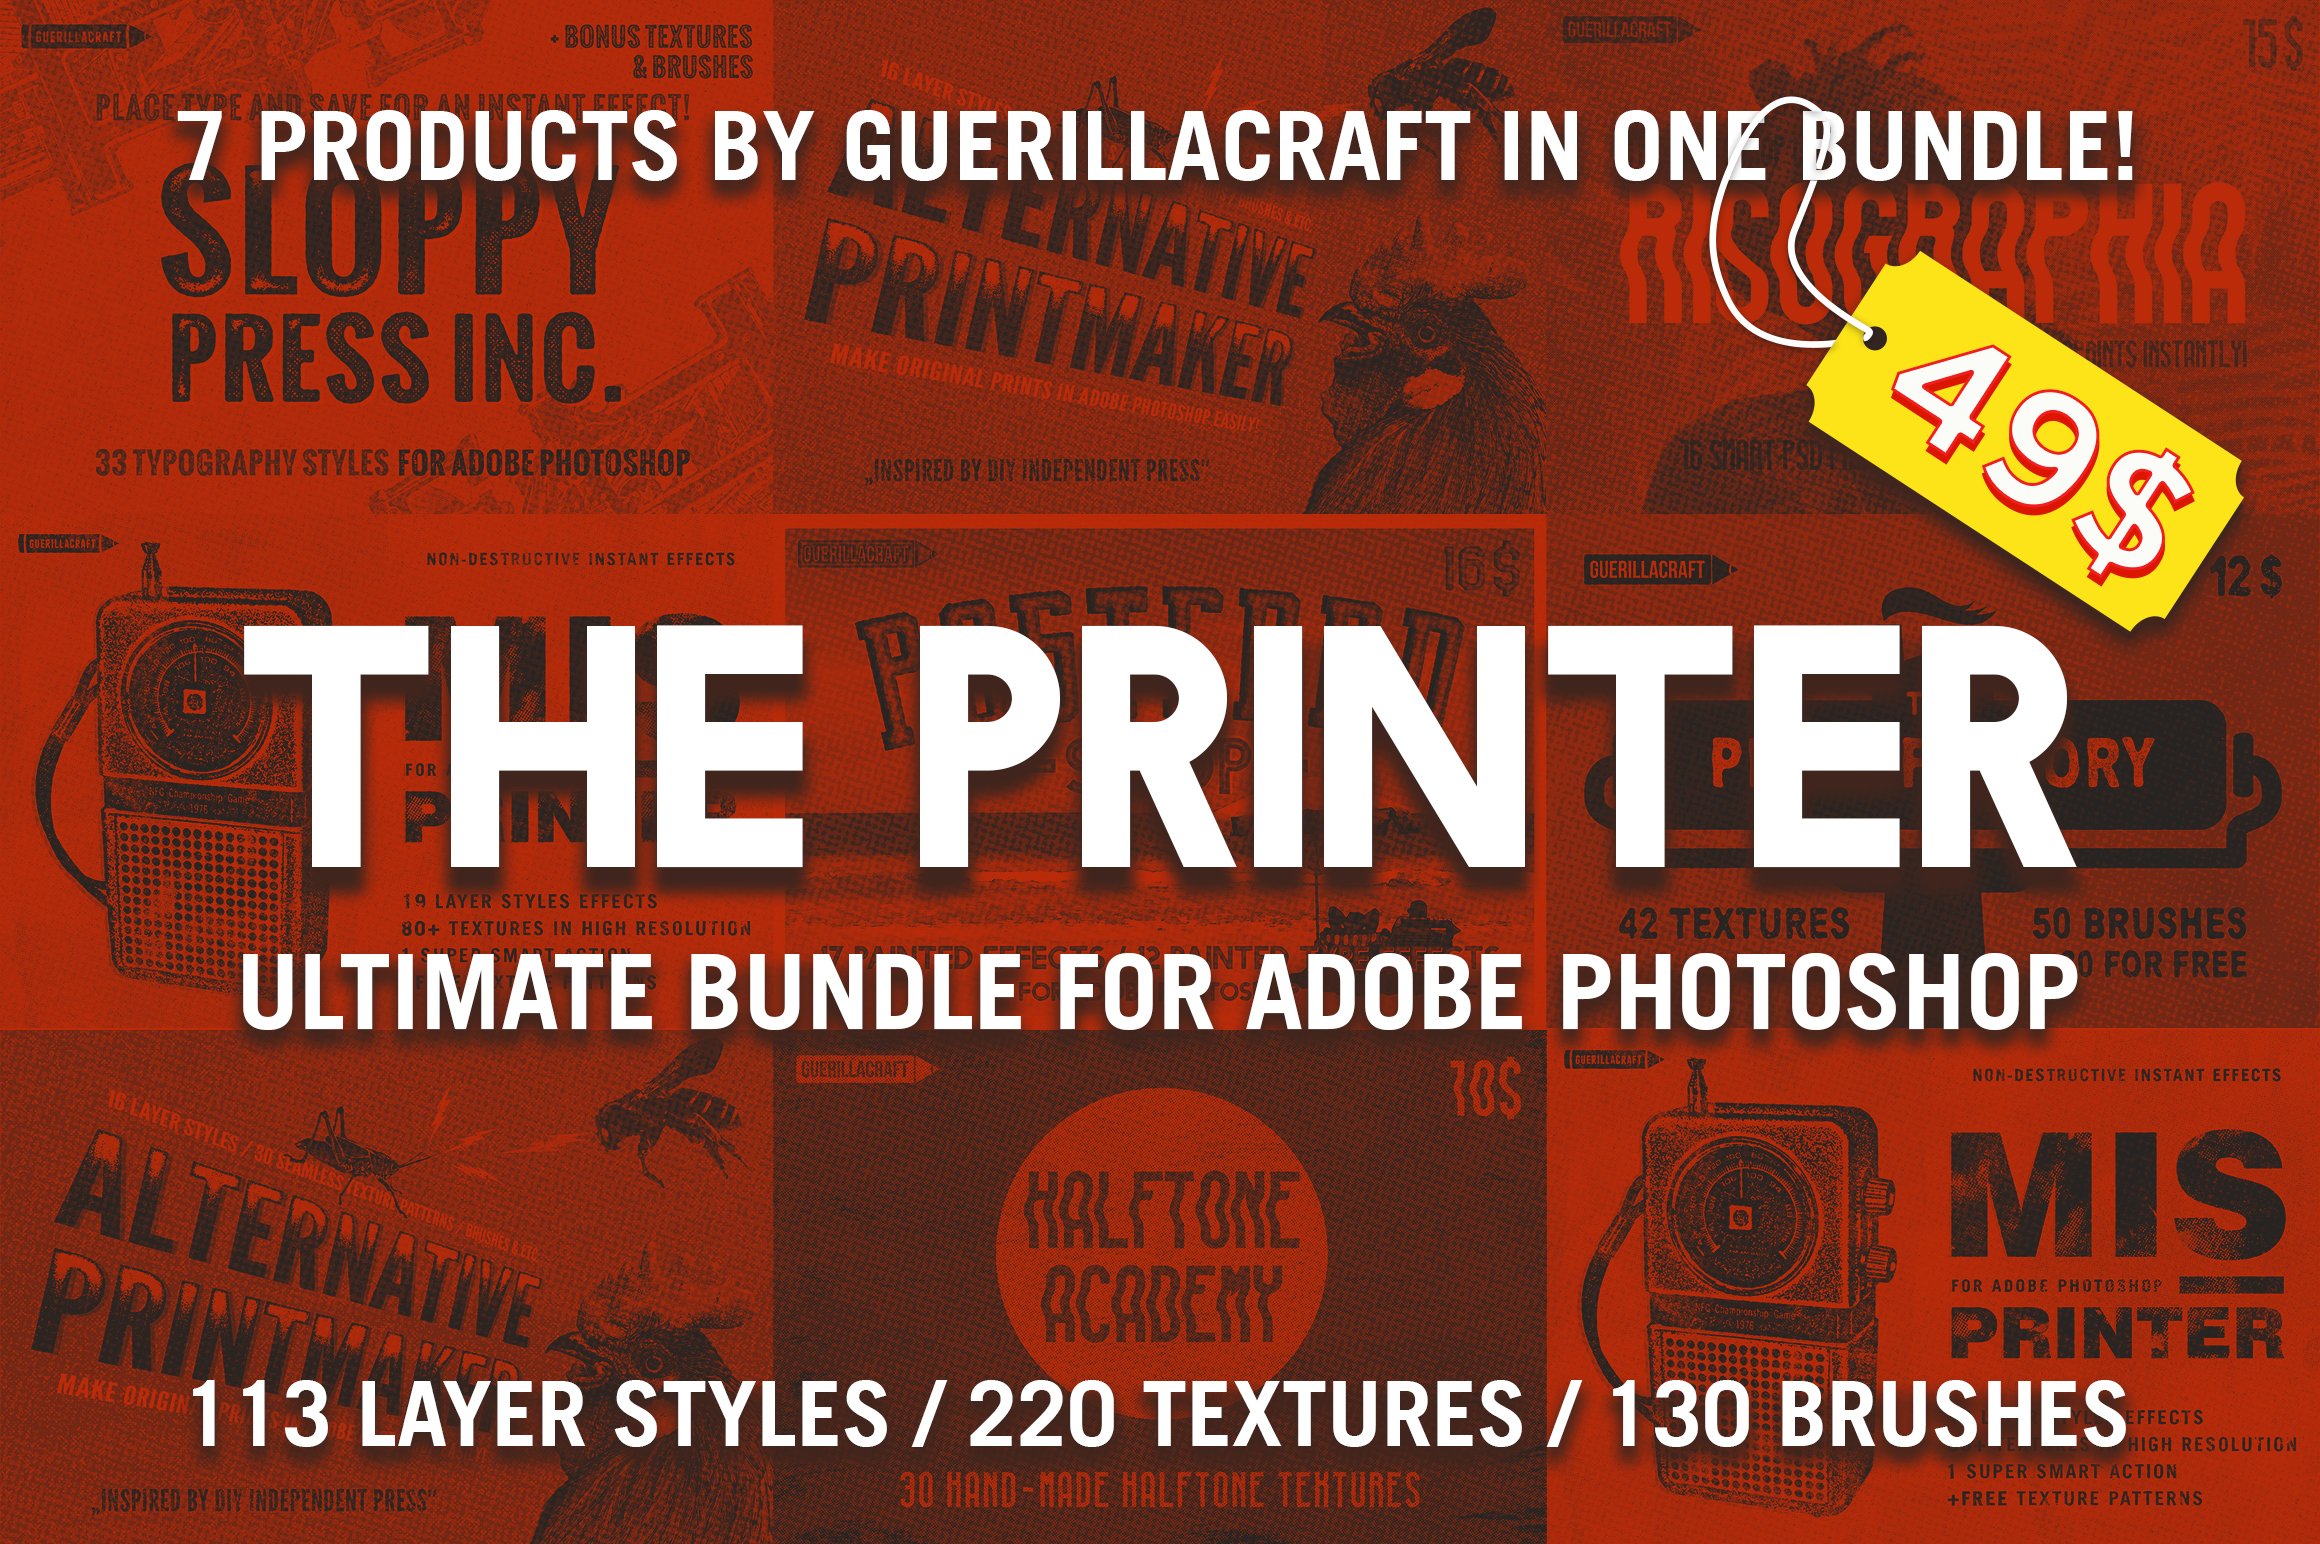 The Printer - Ultimate Bundlecover image.